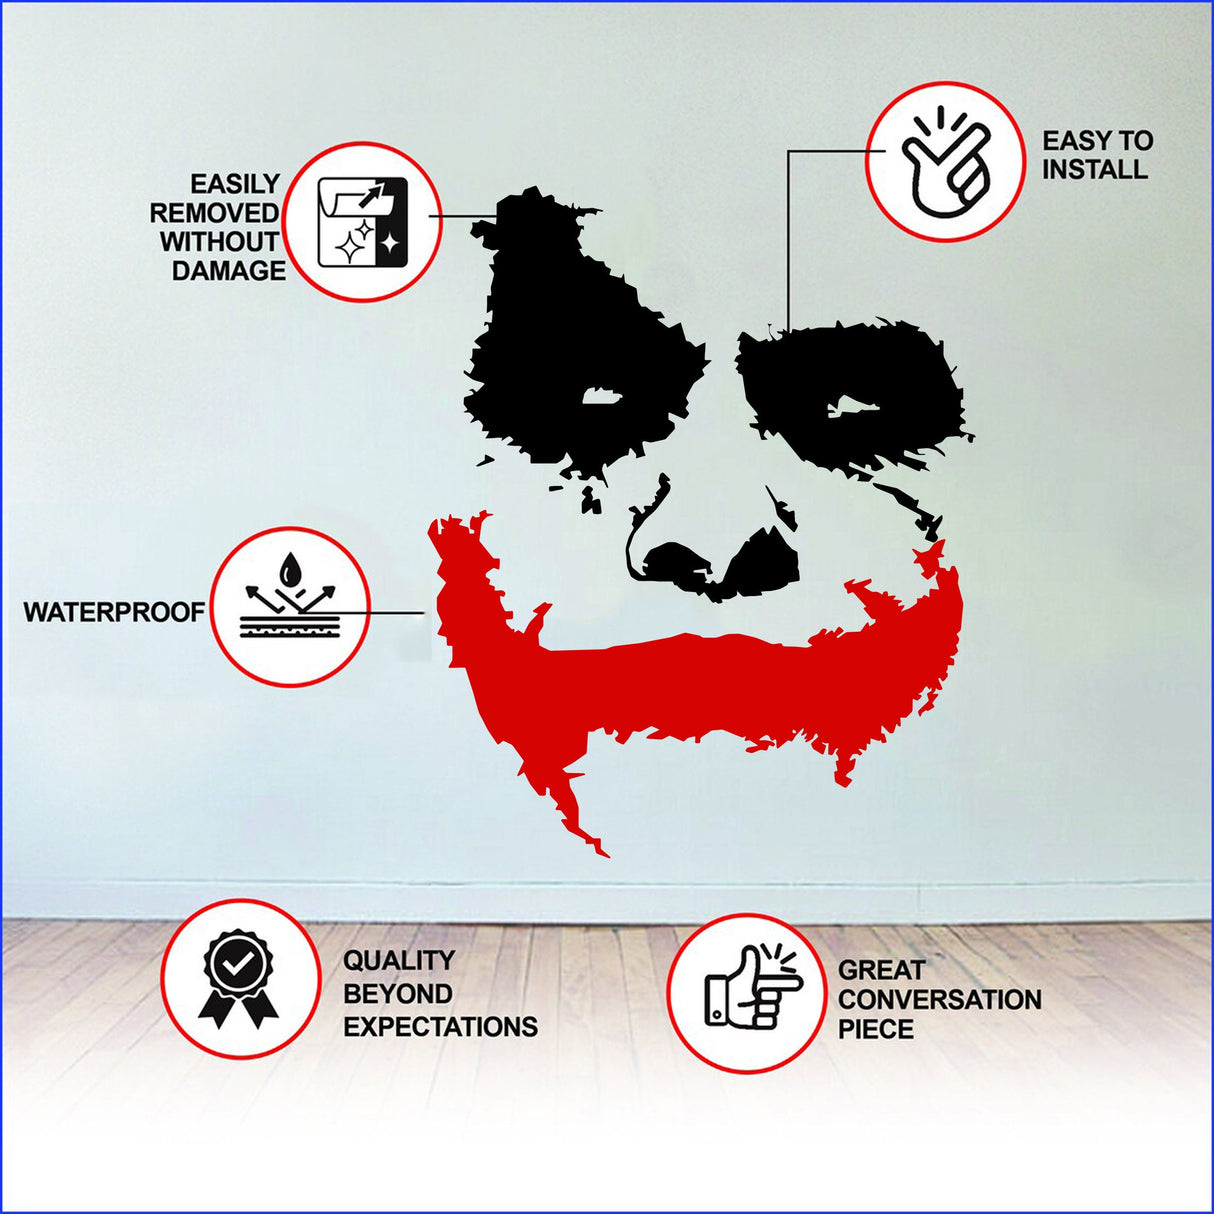 Joker Wall Sticker For Decor - Funny Smiling Clown Face Black Vinyl Decal